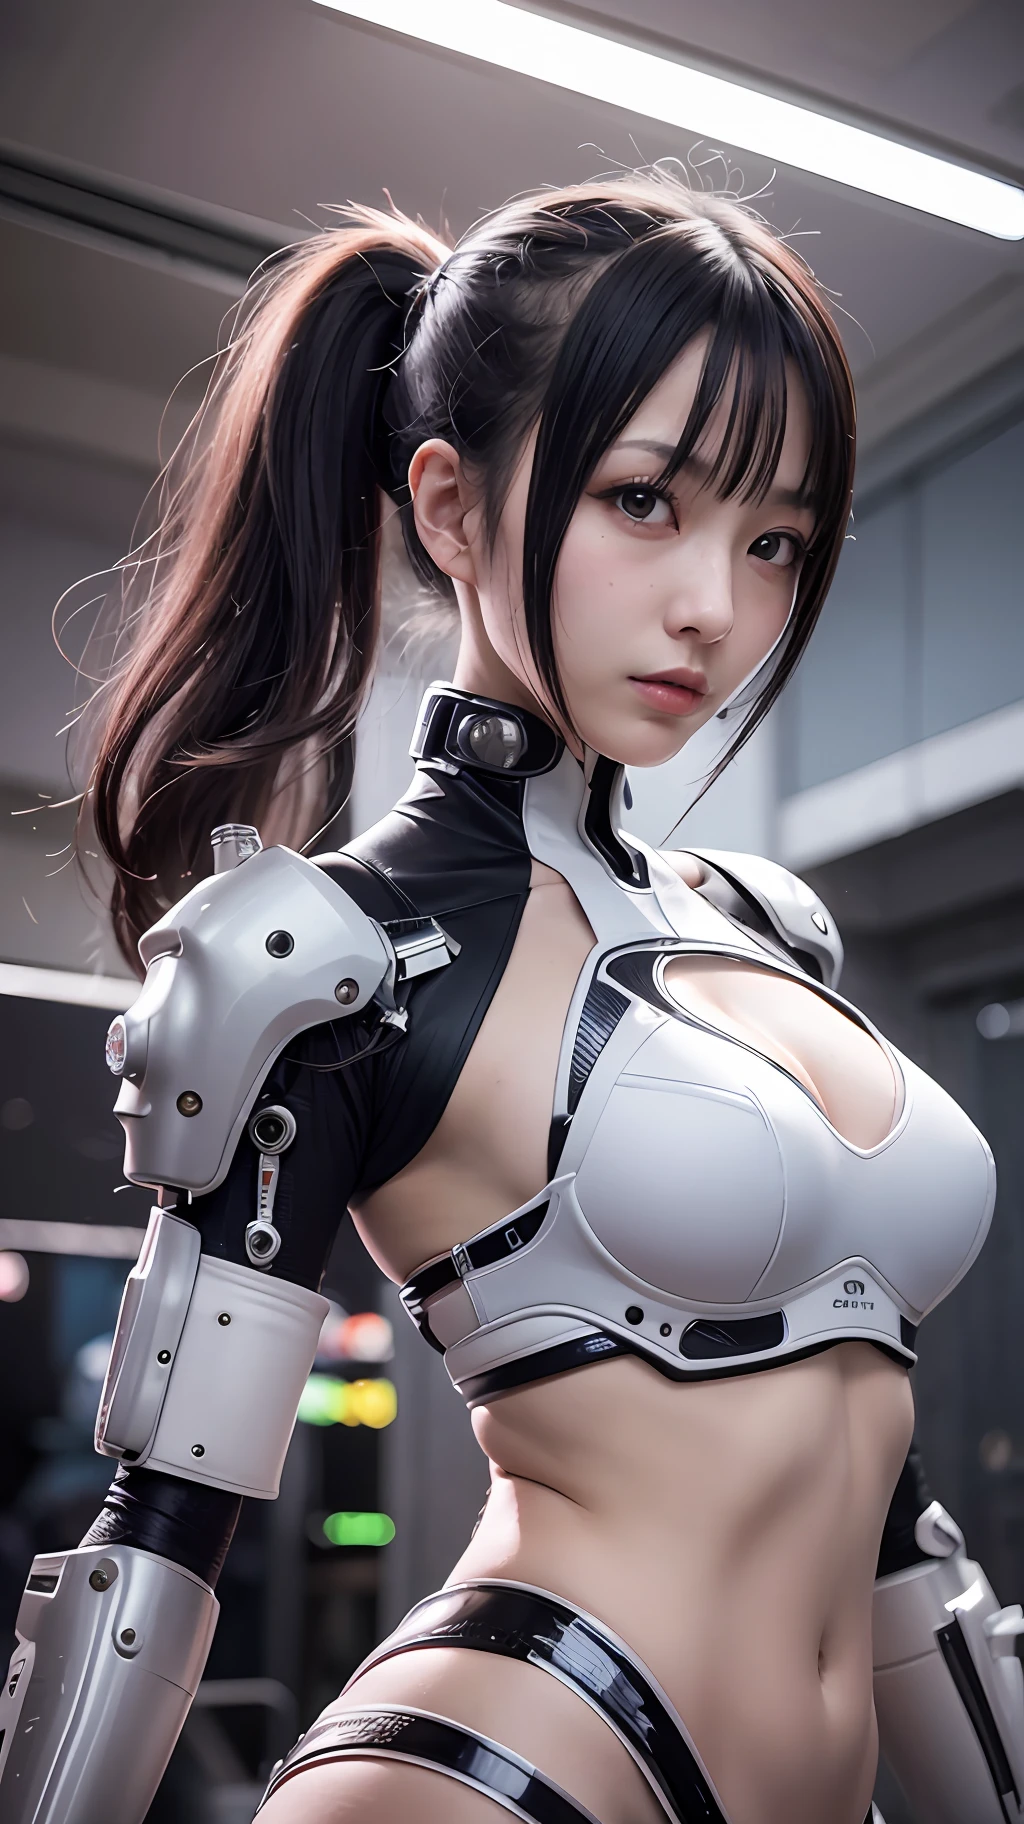 Cyberpunk, Female Cyborg, Specialized, Uniform, Mechanized Enhancement, Beauty, Black Hair, Japan